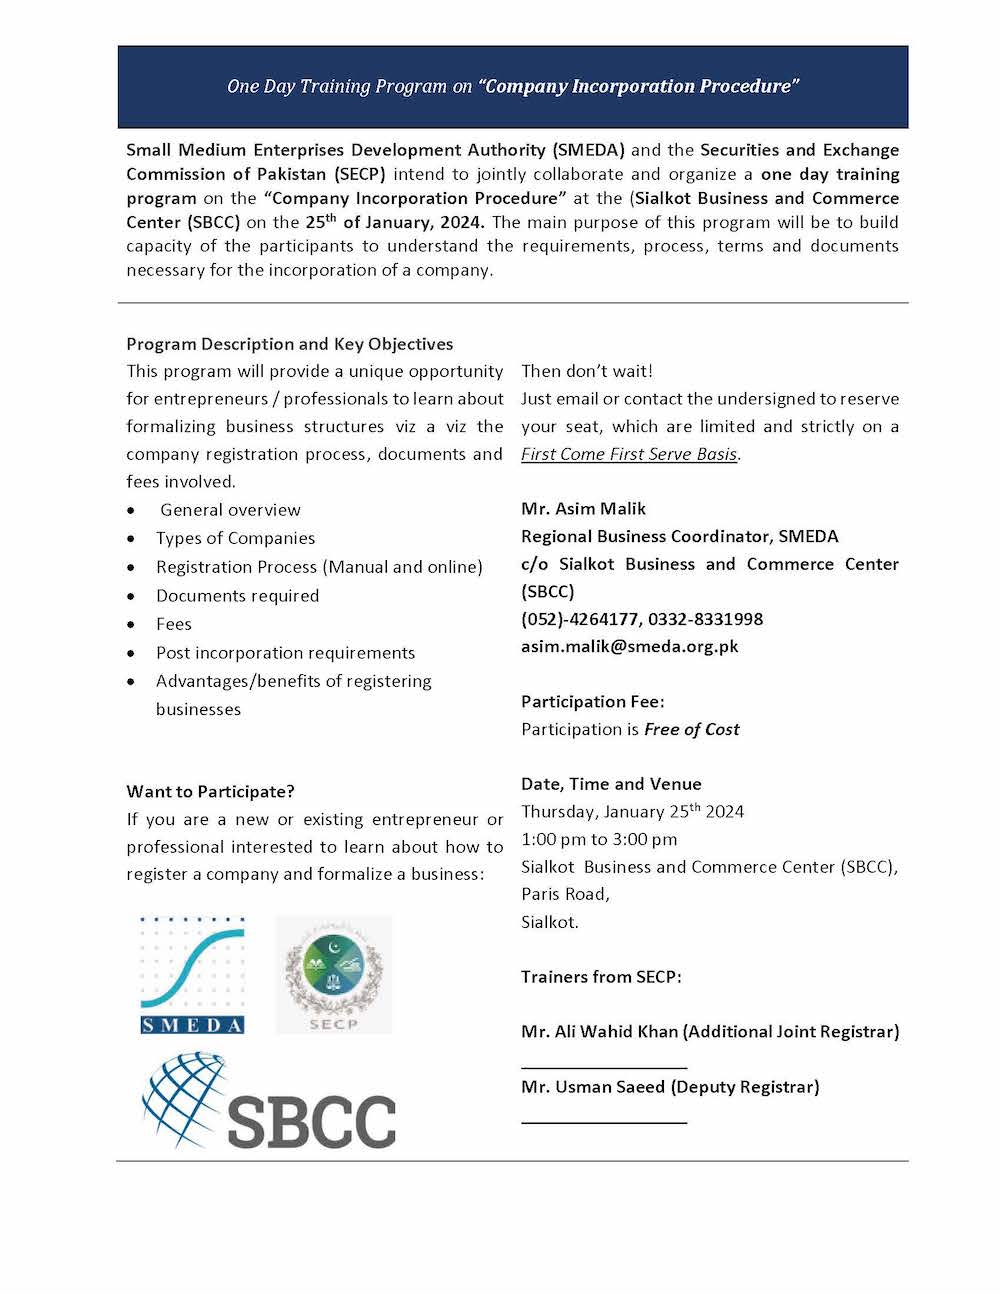 Company Incorporation Procedure SBCC 25 1 2024